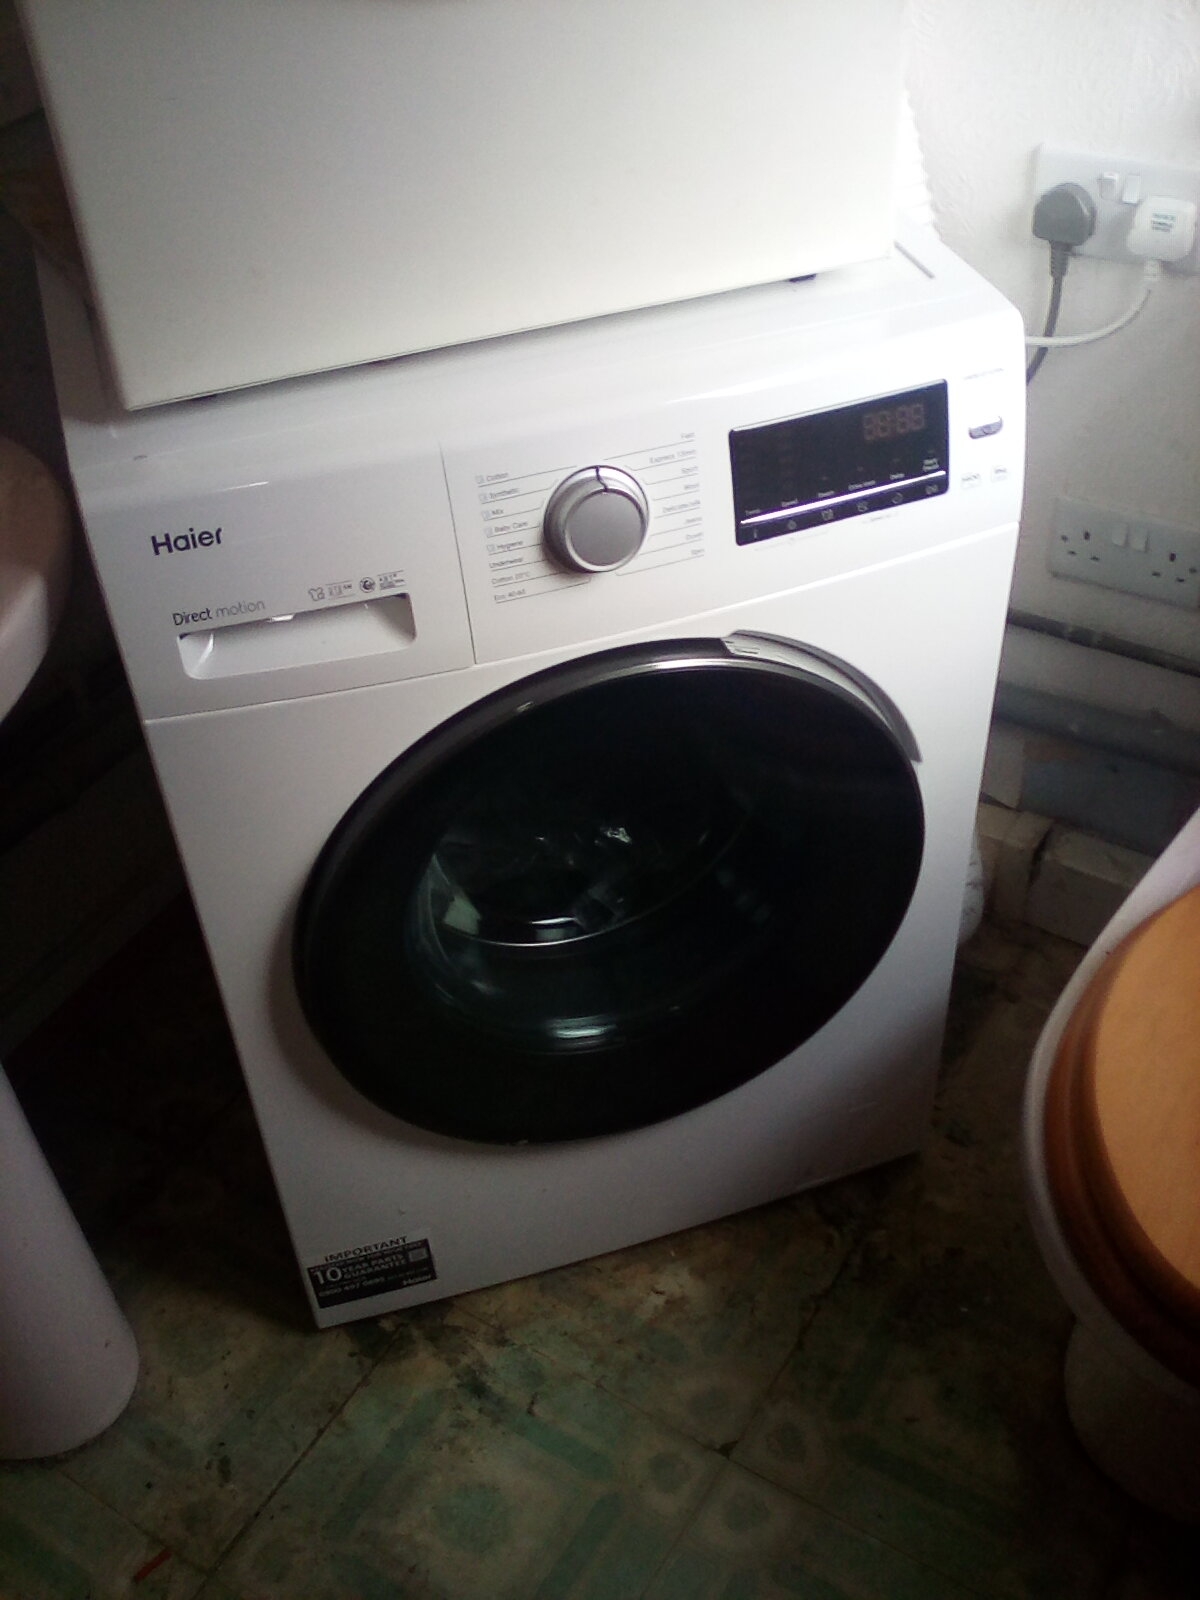 Our new washing machine.